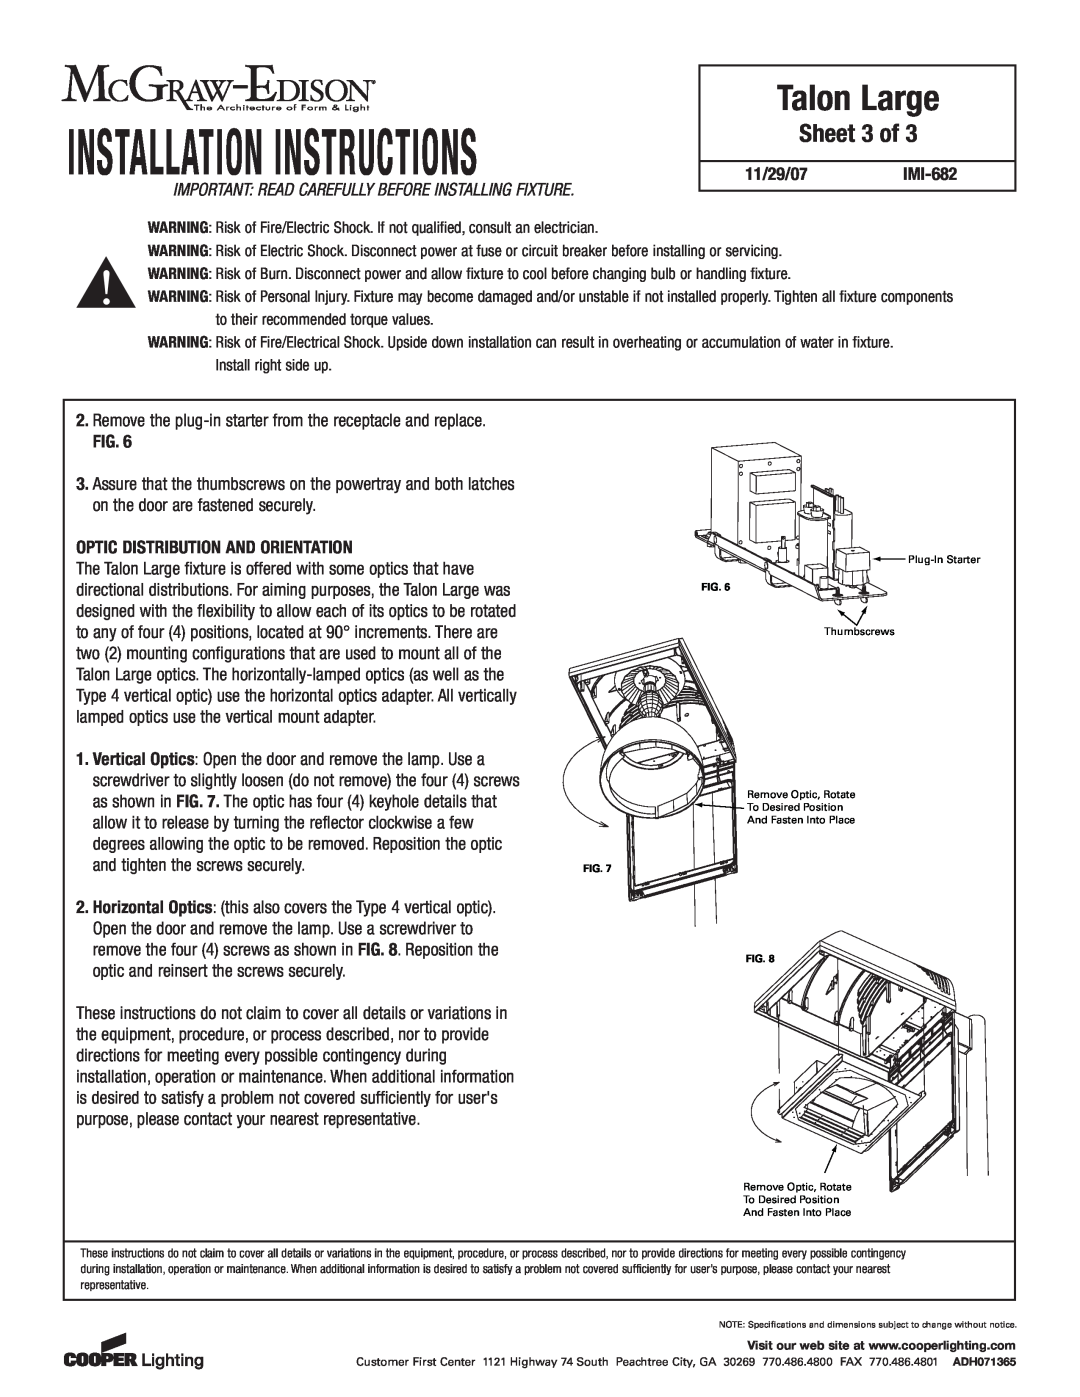 Cooper Lighting IMI-682 installation instructions Sheet 3 of, Installation Instructions, Talon Large 